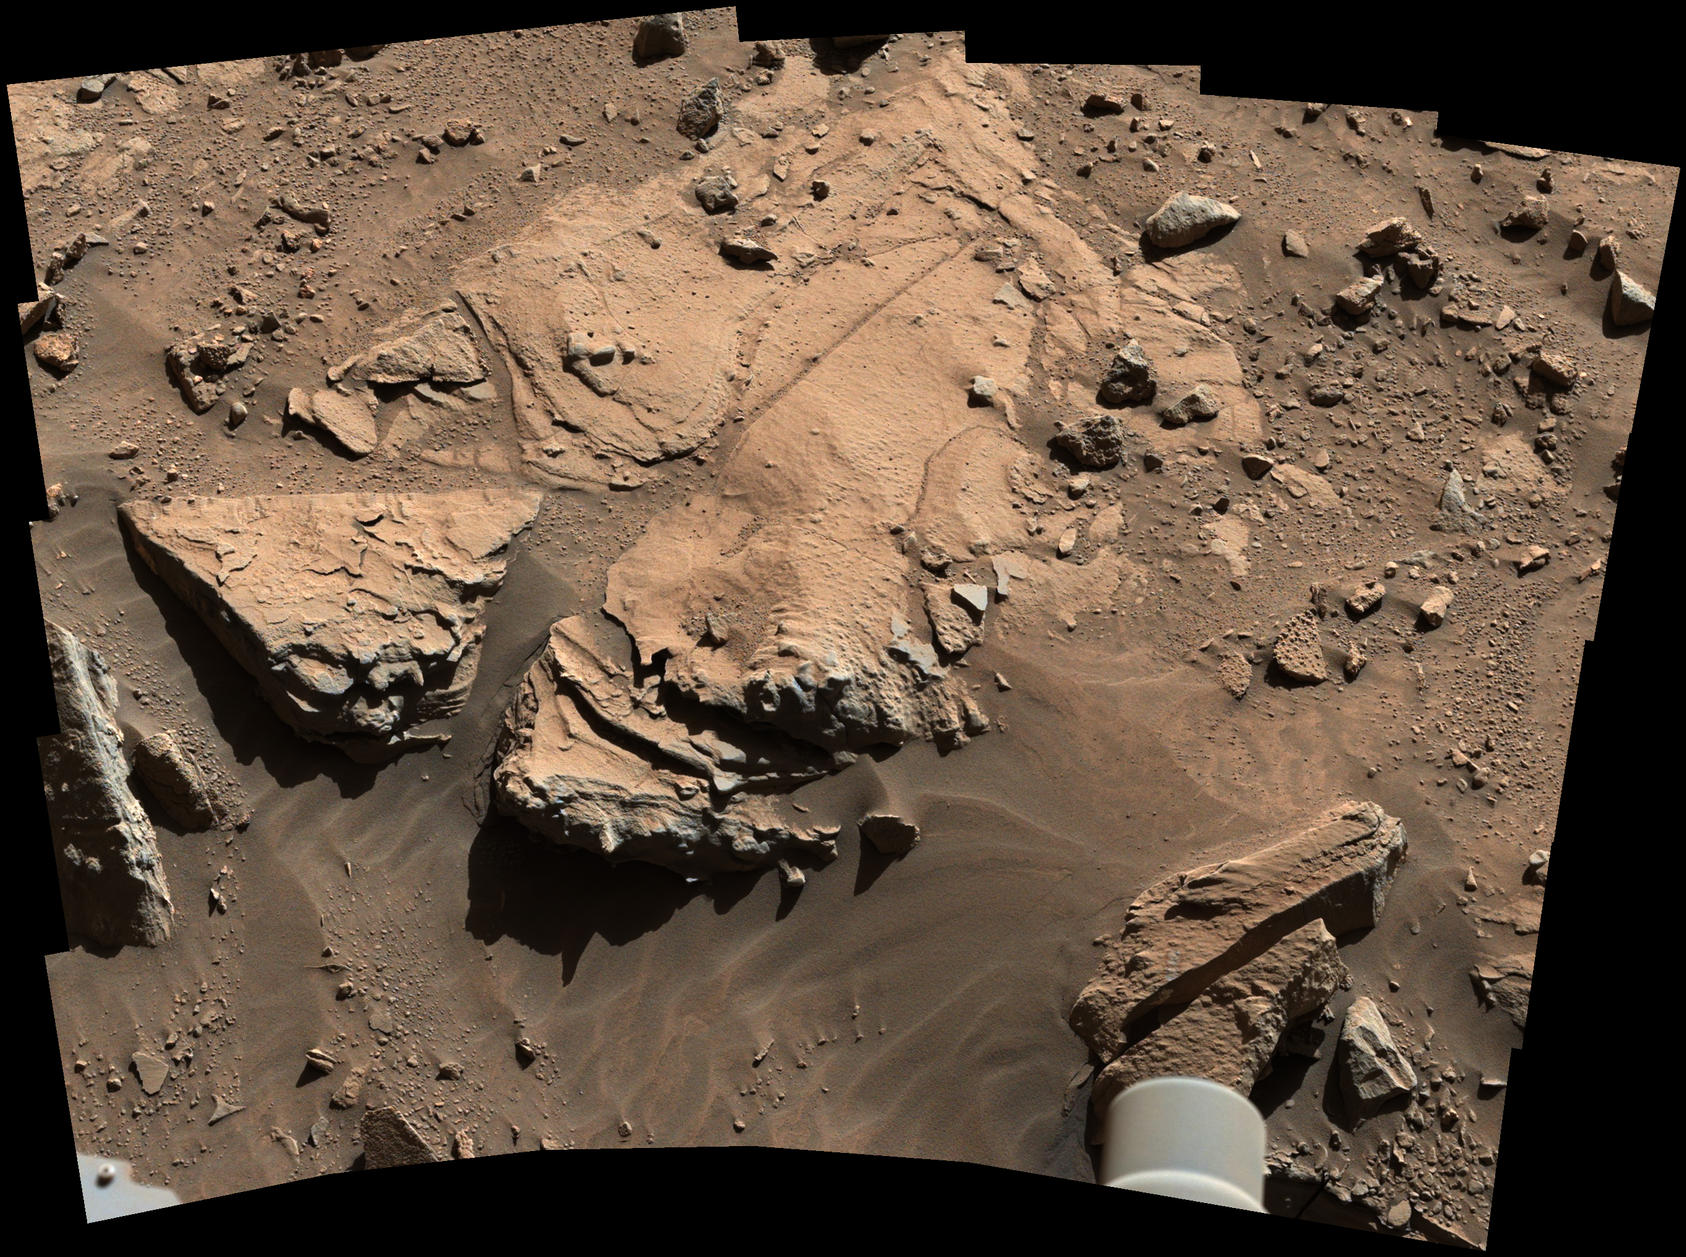 Curiosity Mars Rover Beside Sandstone Target 'Windjana'